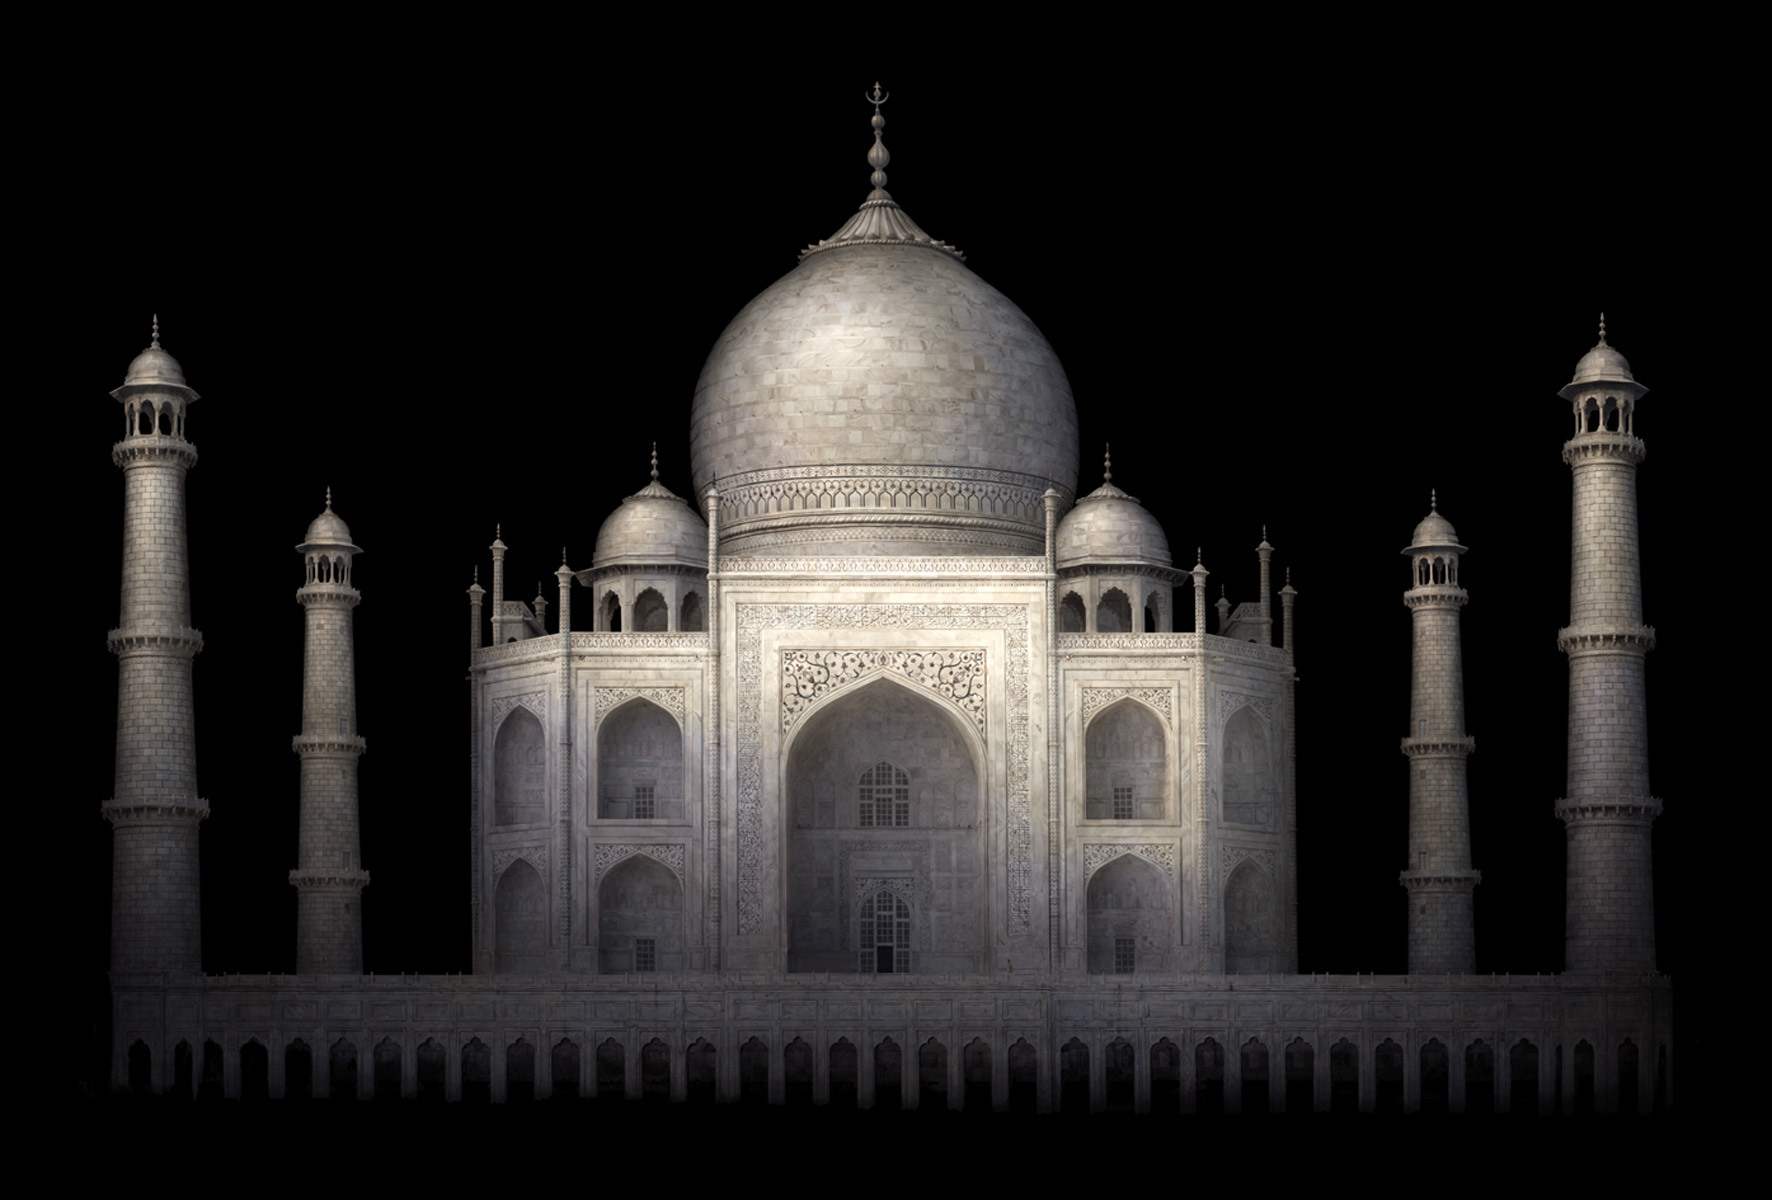 Irene Kung. "Taj Mahal 2014". 100x148